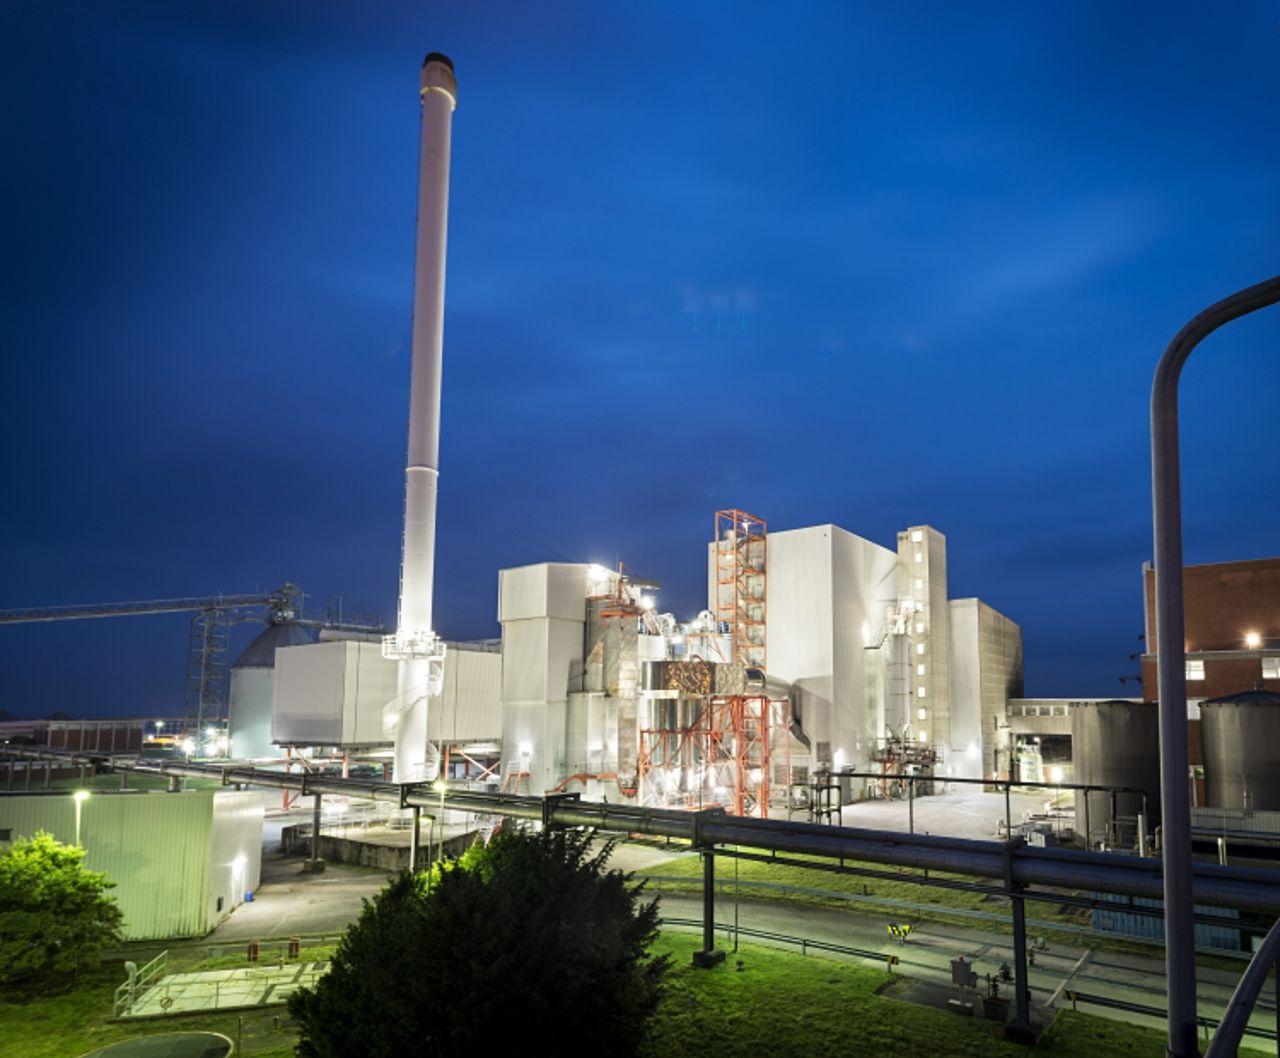 Biomass plant lit up at night